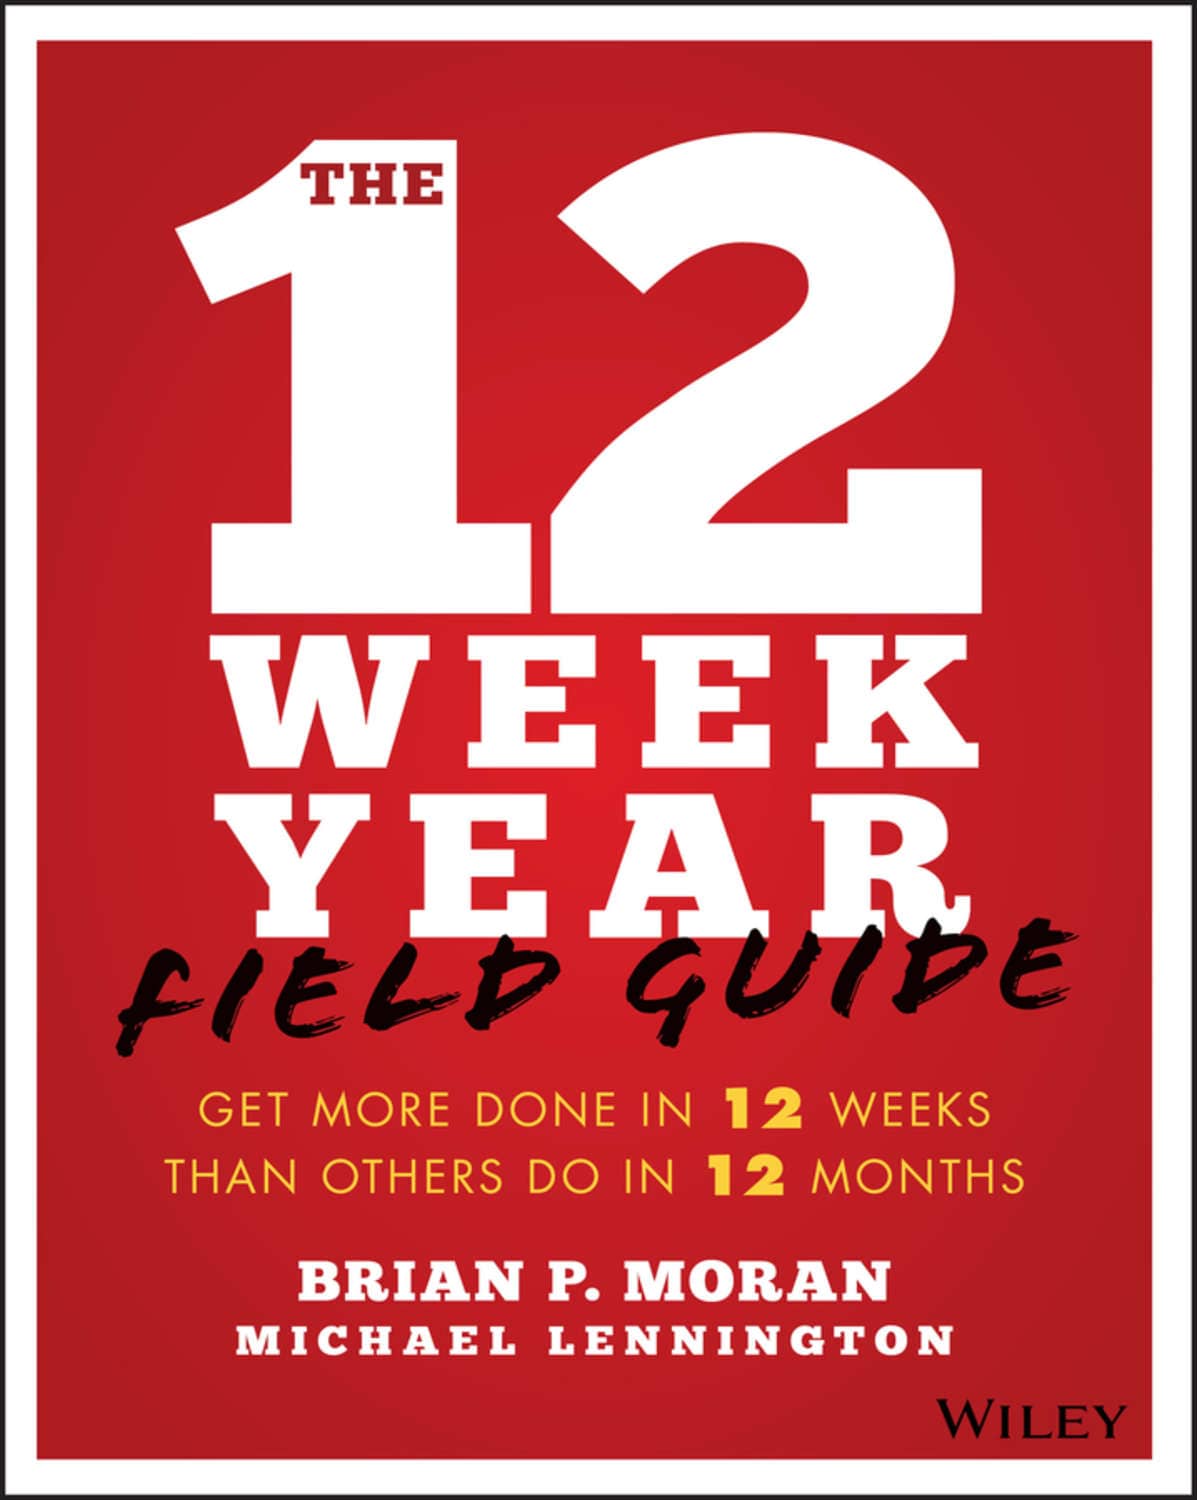 12 week year book the 12 week year brian p. moran